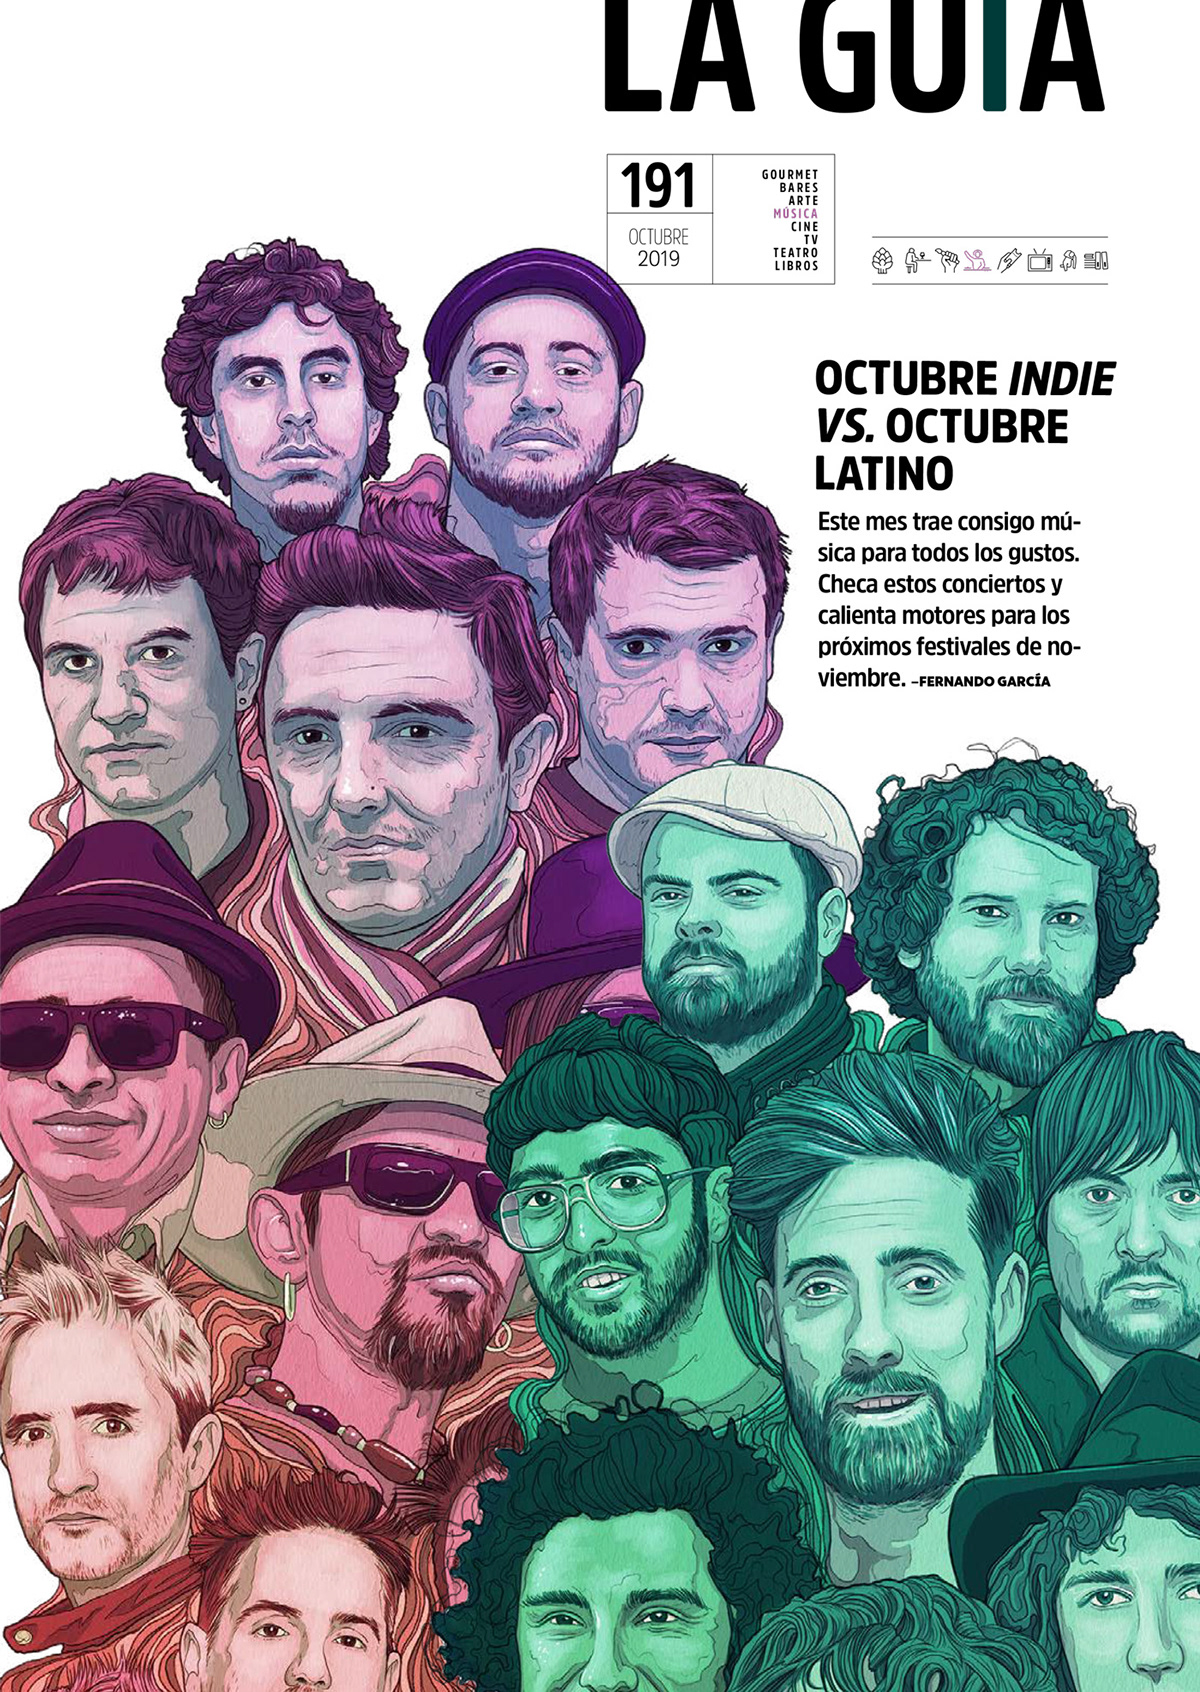 editorial magazine music indie latino Adobe Photoshop digital illustration Wacom Cintiq ipad pro Procreate